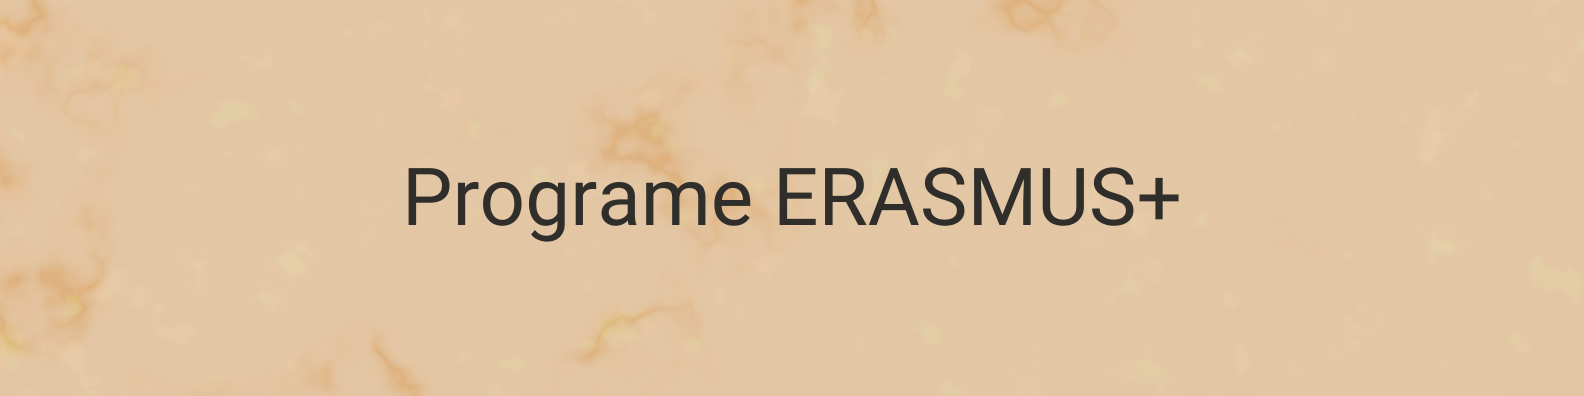 Programe ERASMUS+